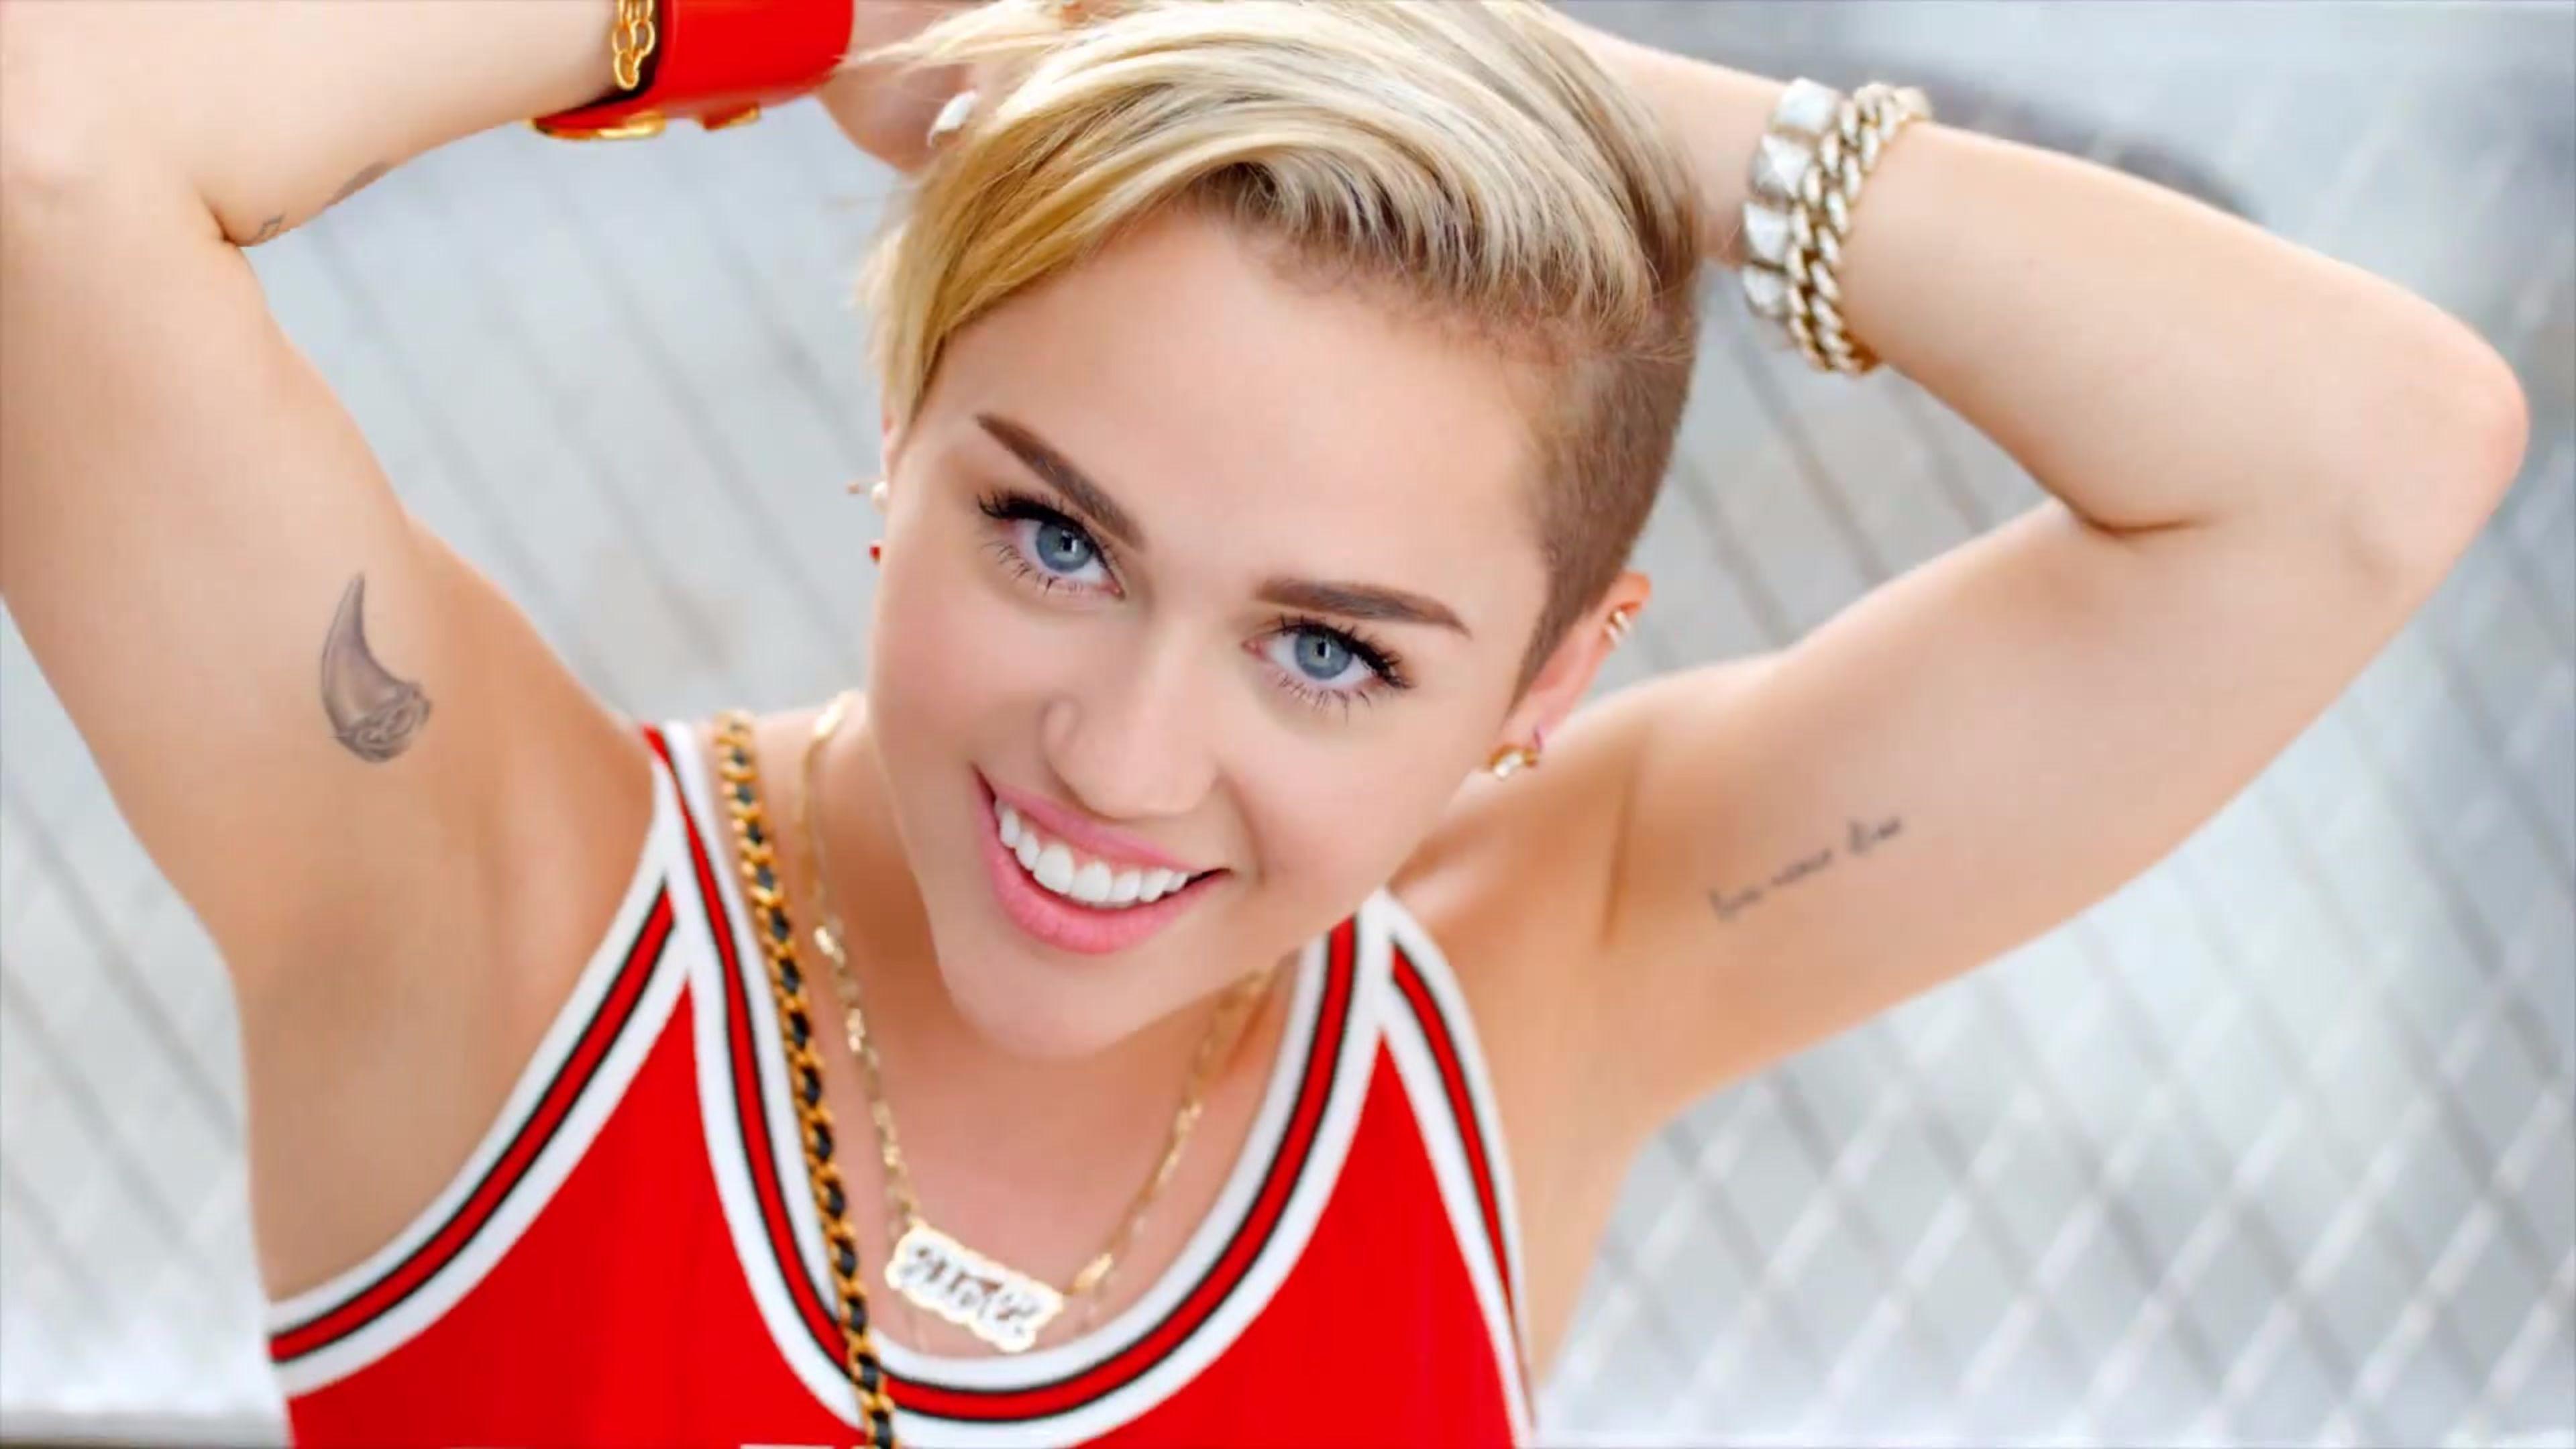 Download 4K Miley Cyrus Wallpaper. Free 4K Wallpaper